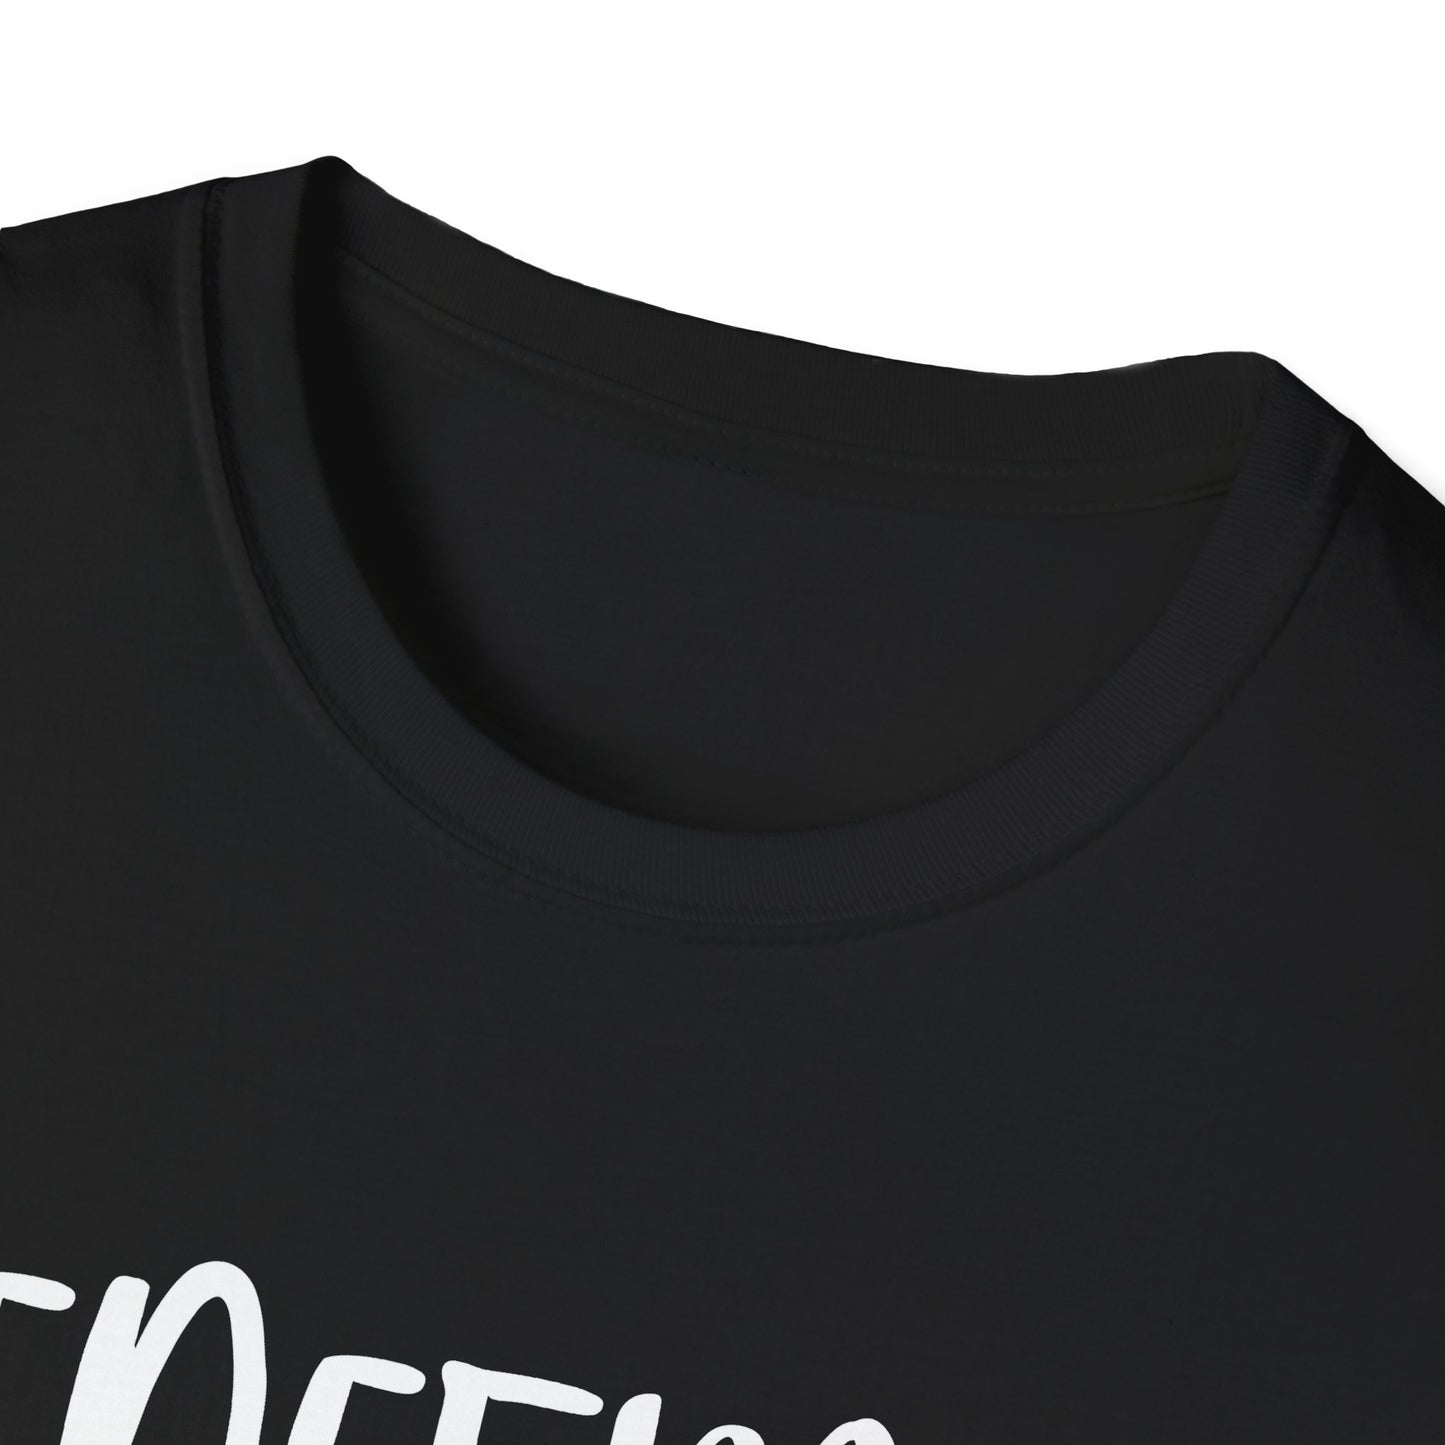 Redeemed Unisex Softstyle T-Shirt